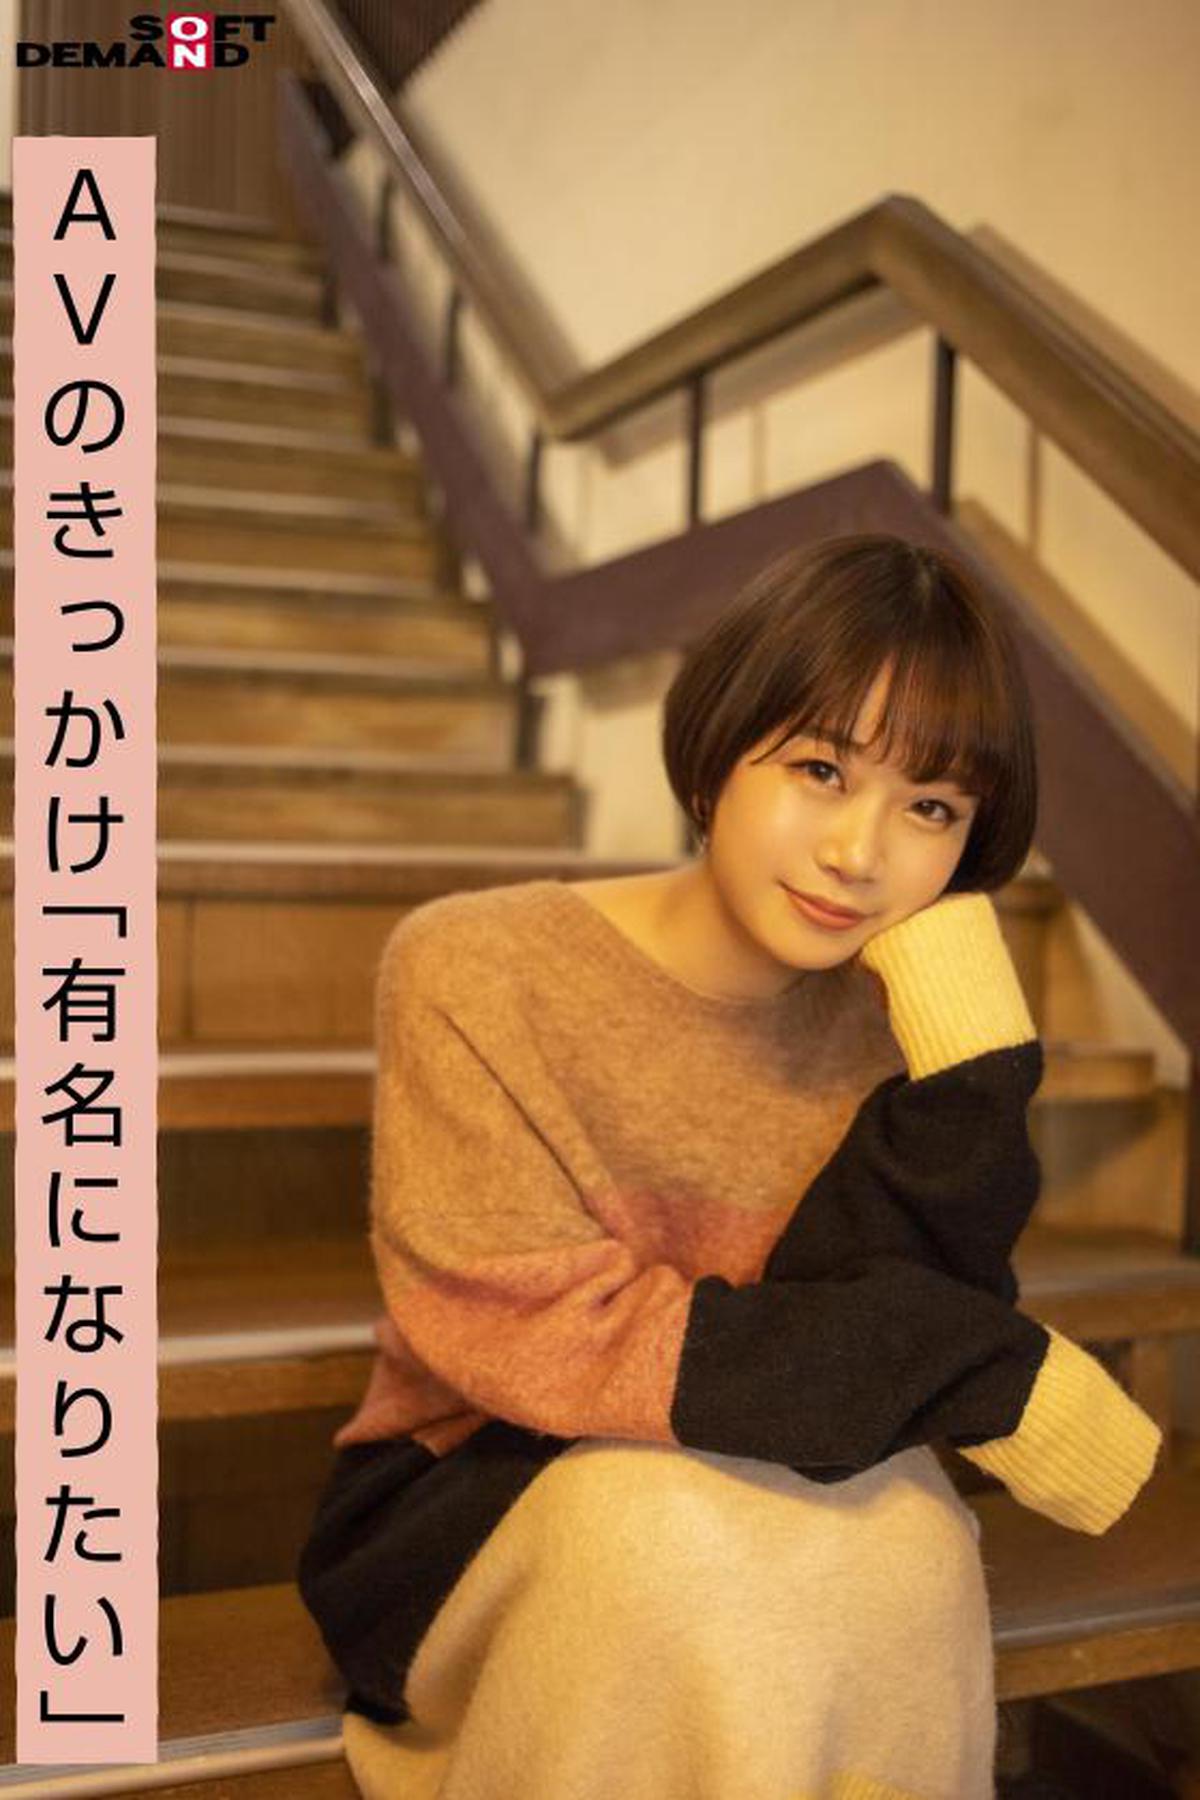 107EMOI-015 Gadis Emo / Gonzo Pertama di Yukata / "Mungkin aku suka SM Poi" / Topiknya terus memanas! !! / Mahasiswa tingkat dua aktif / Mao Watanabe (19)